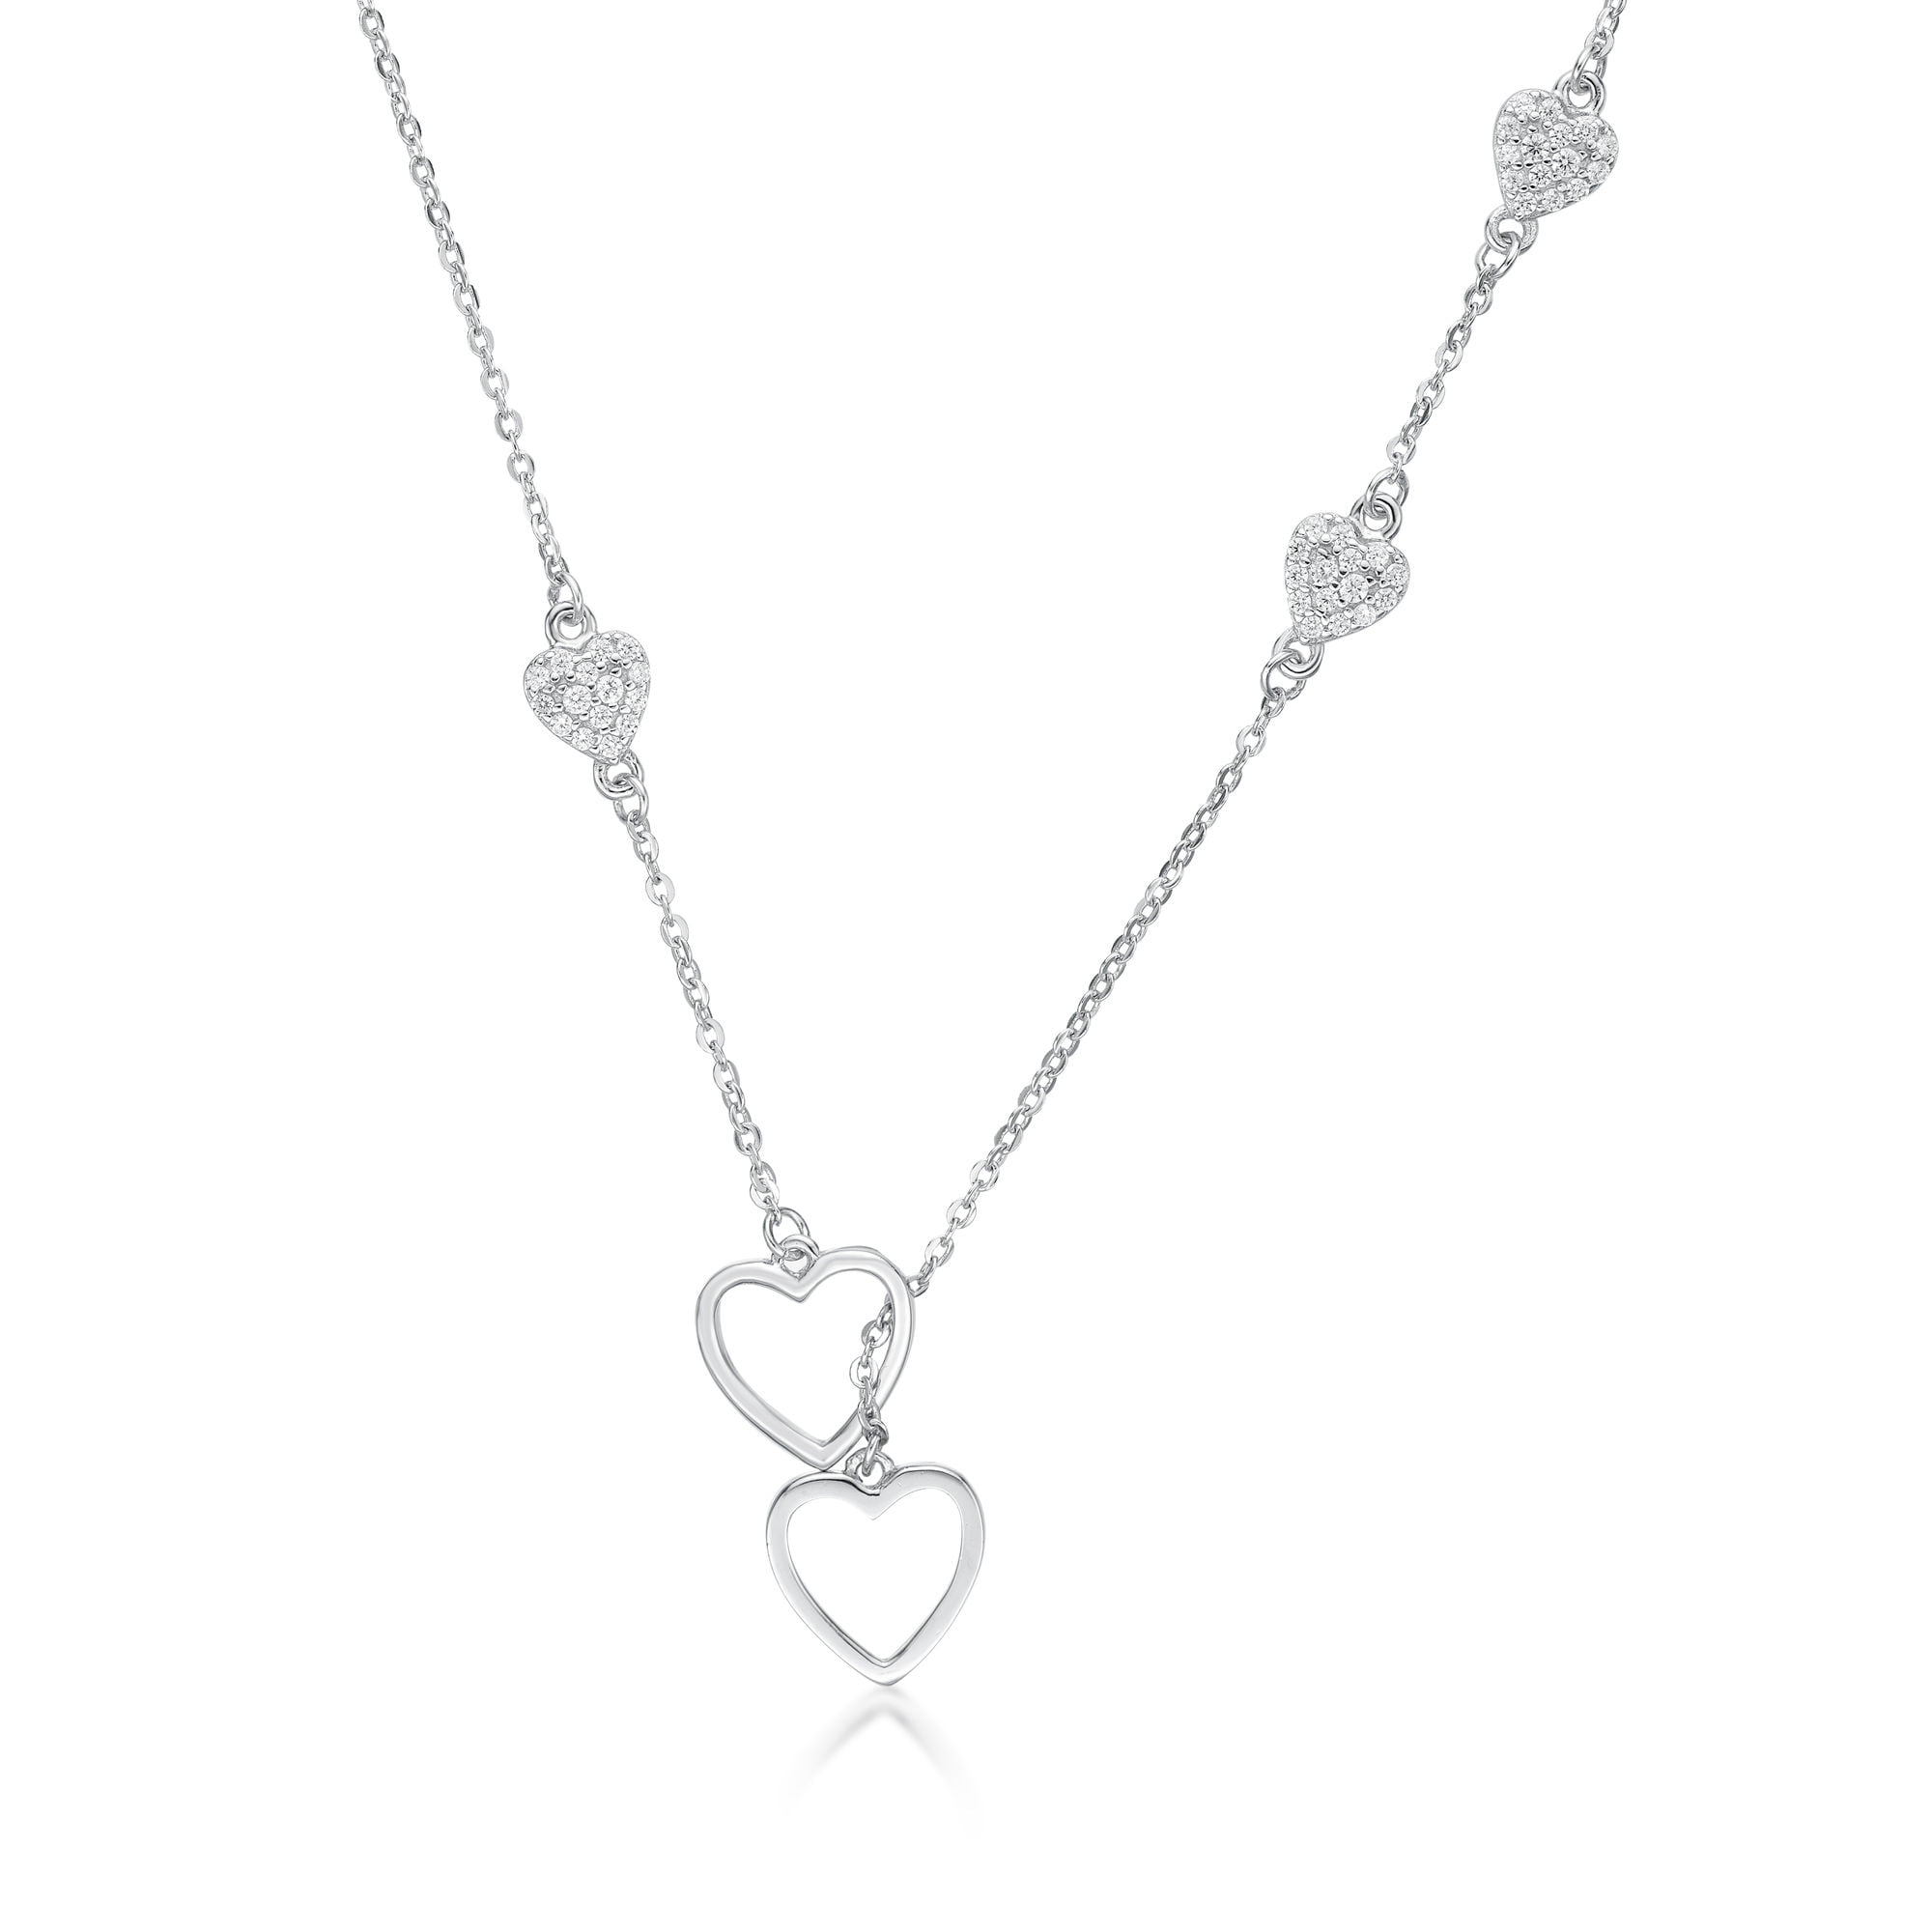 49088-necklace-cz-sterling-silver-2.jpg